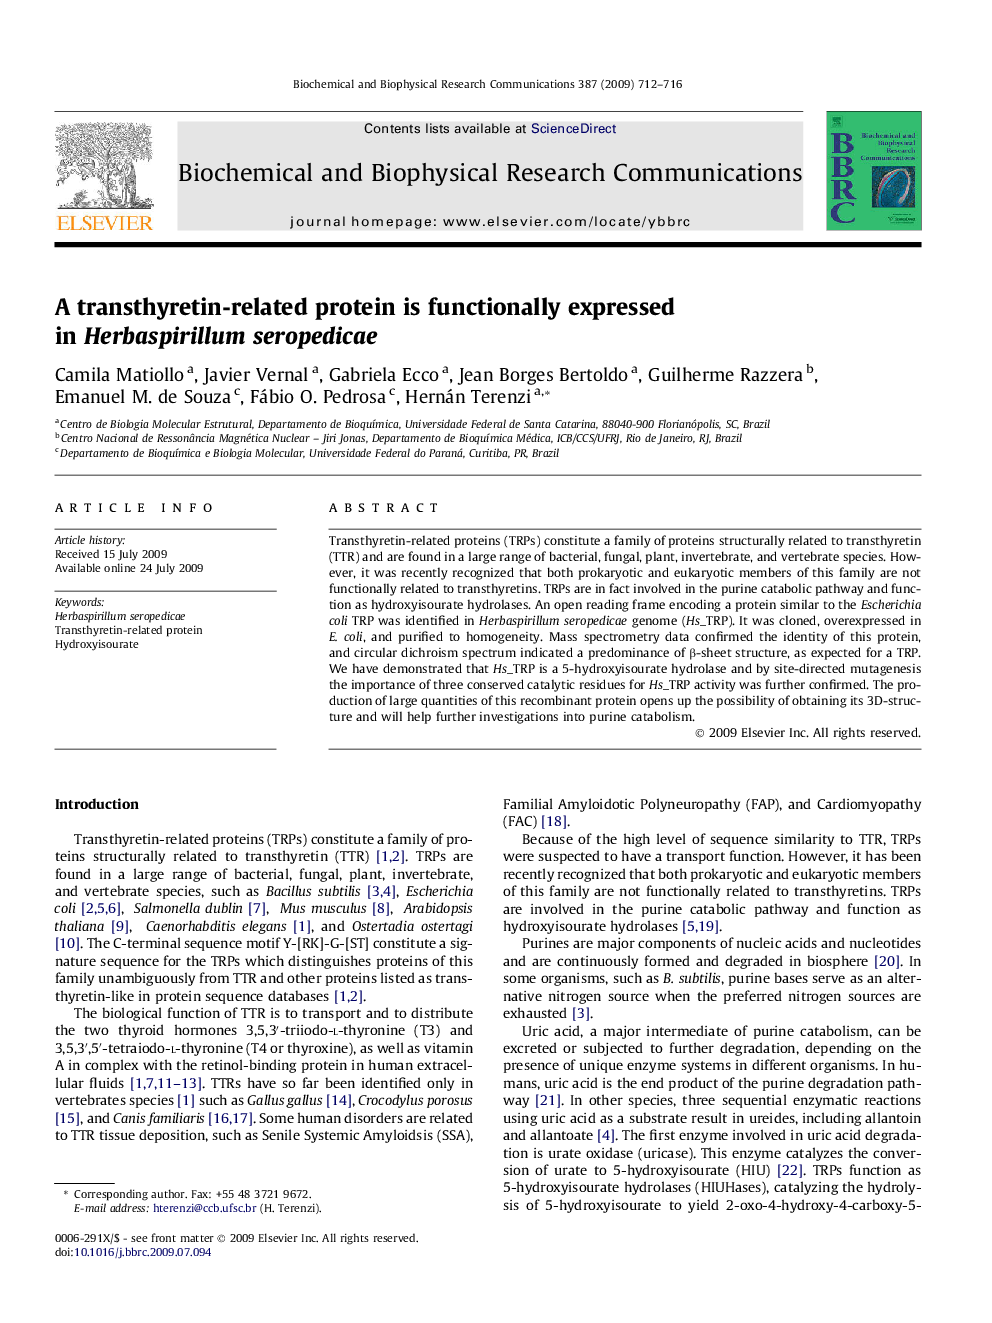 A transthyretin-related protein is functionally expressed in Herbaspirillum seropedicae